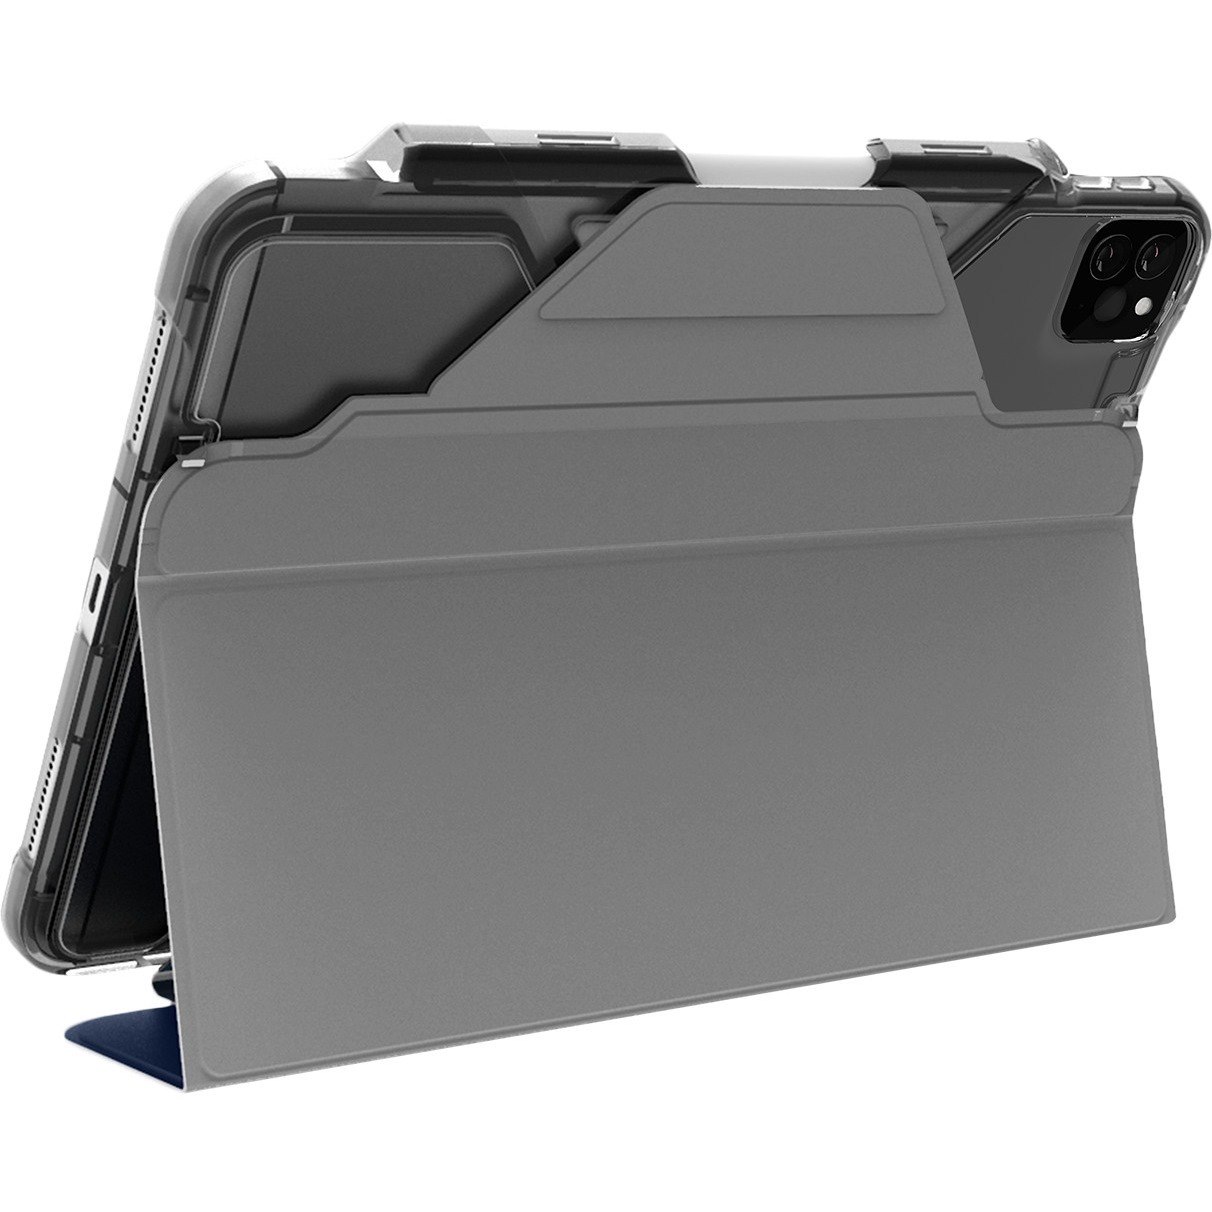 STM Goods Dux Studio Carrying Case (Folio) for 12.9" Apple iPad Pro (4th Generation), iPad Pro (3rd Generation) Tablet - Midnight Blue